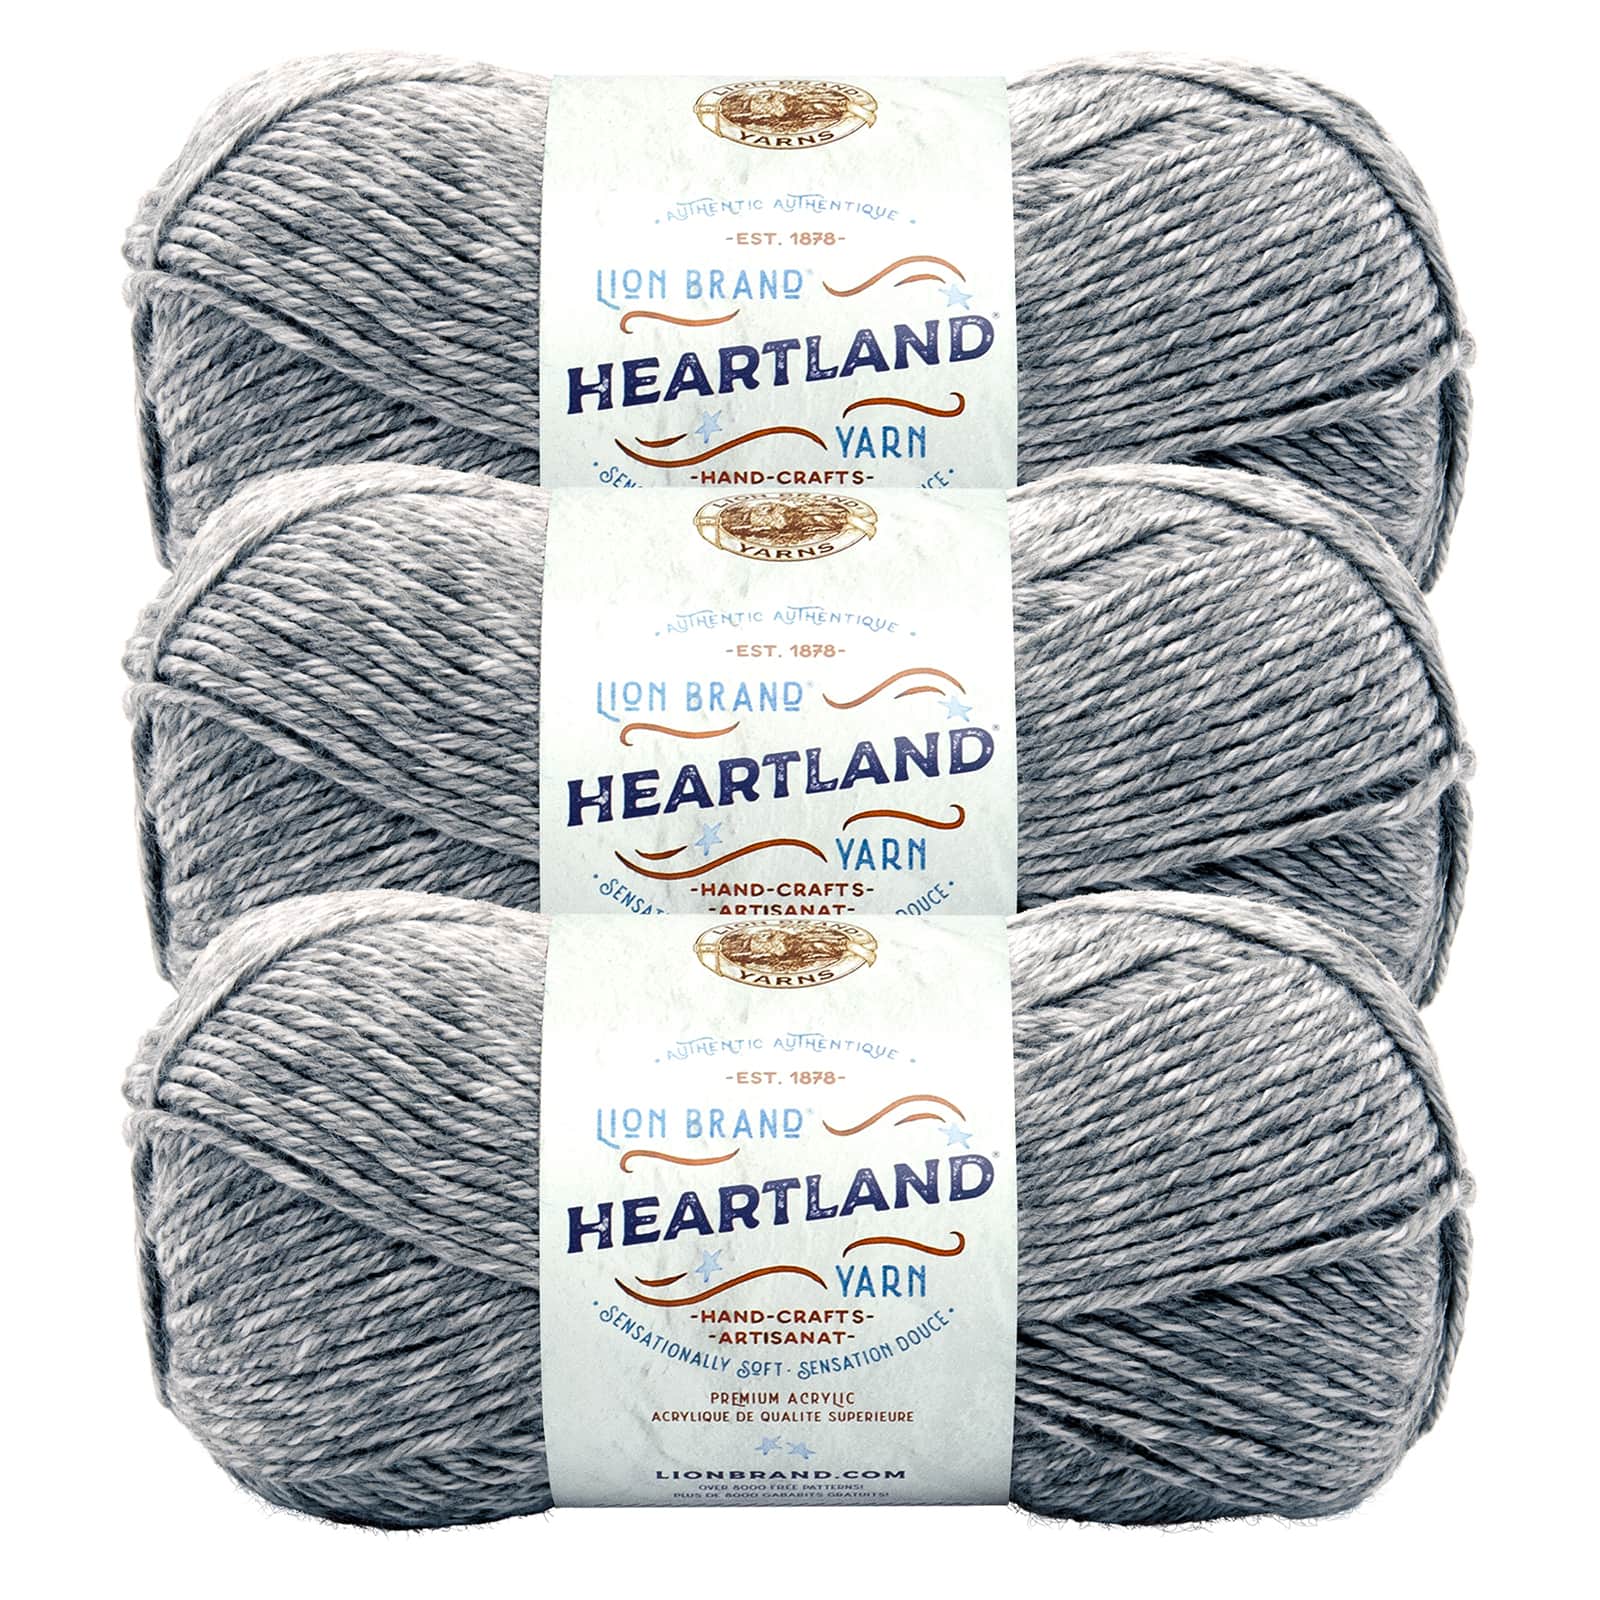 Lion Brand 15 pack: lion brand heartland yarn